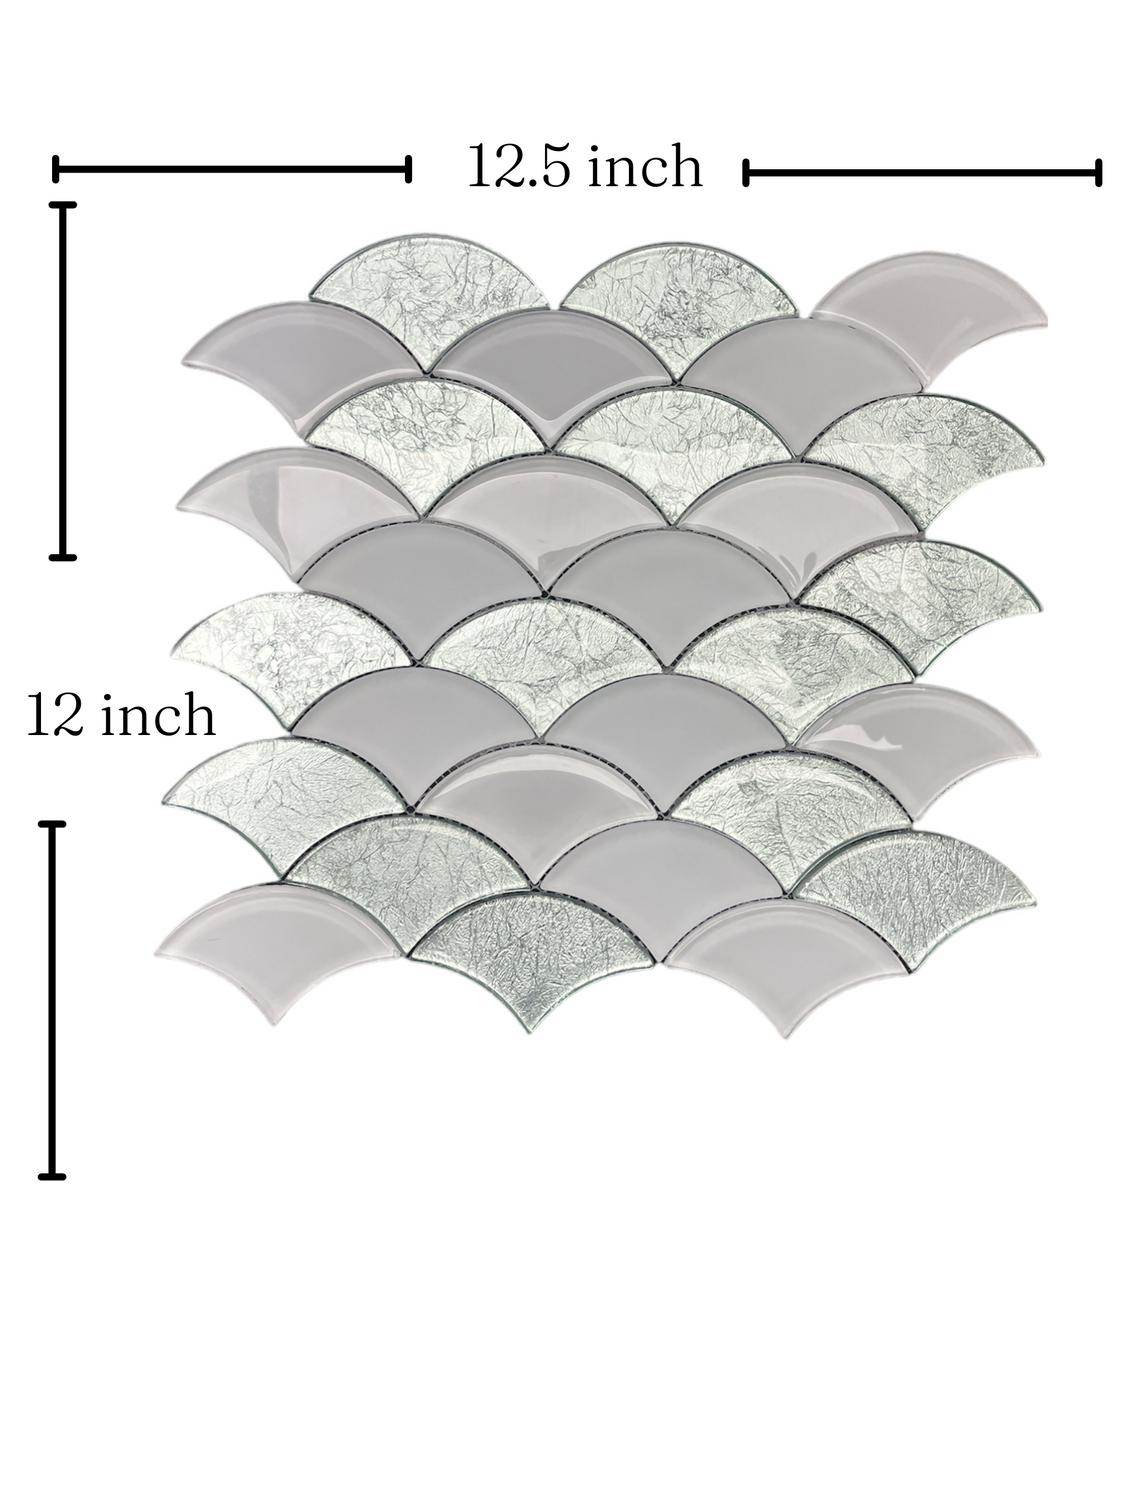 Glitter Silver Sky Scallop Pattern 12x12 Glass Mosaic Wall Tile for Kitchen Backsplash, Bathroom Shower, Accent Wall